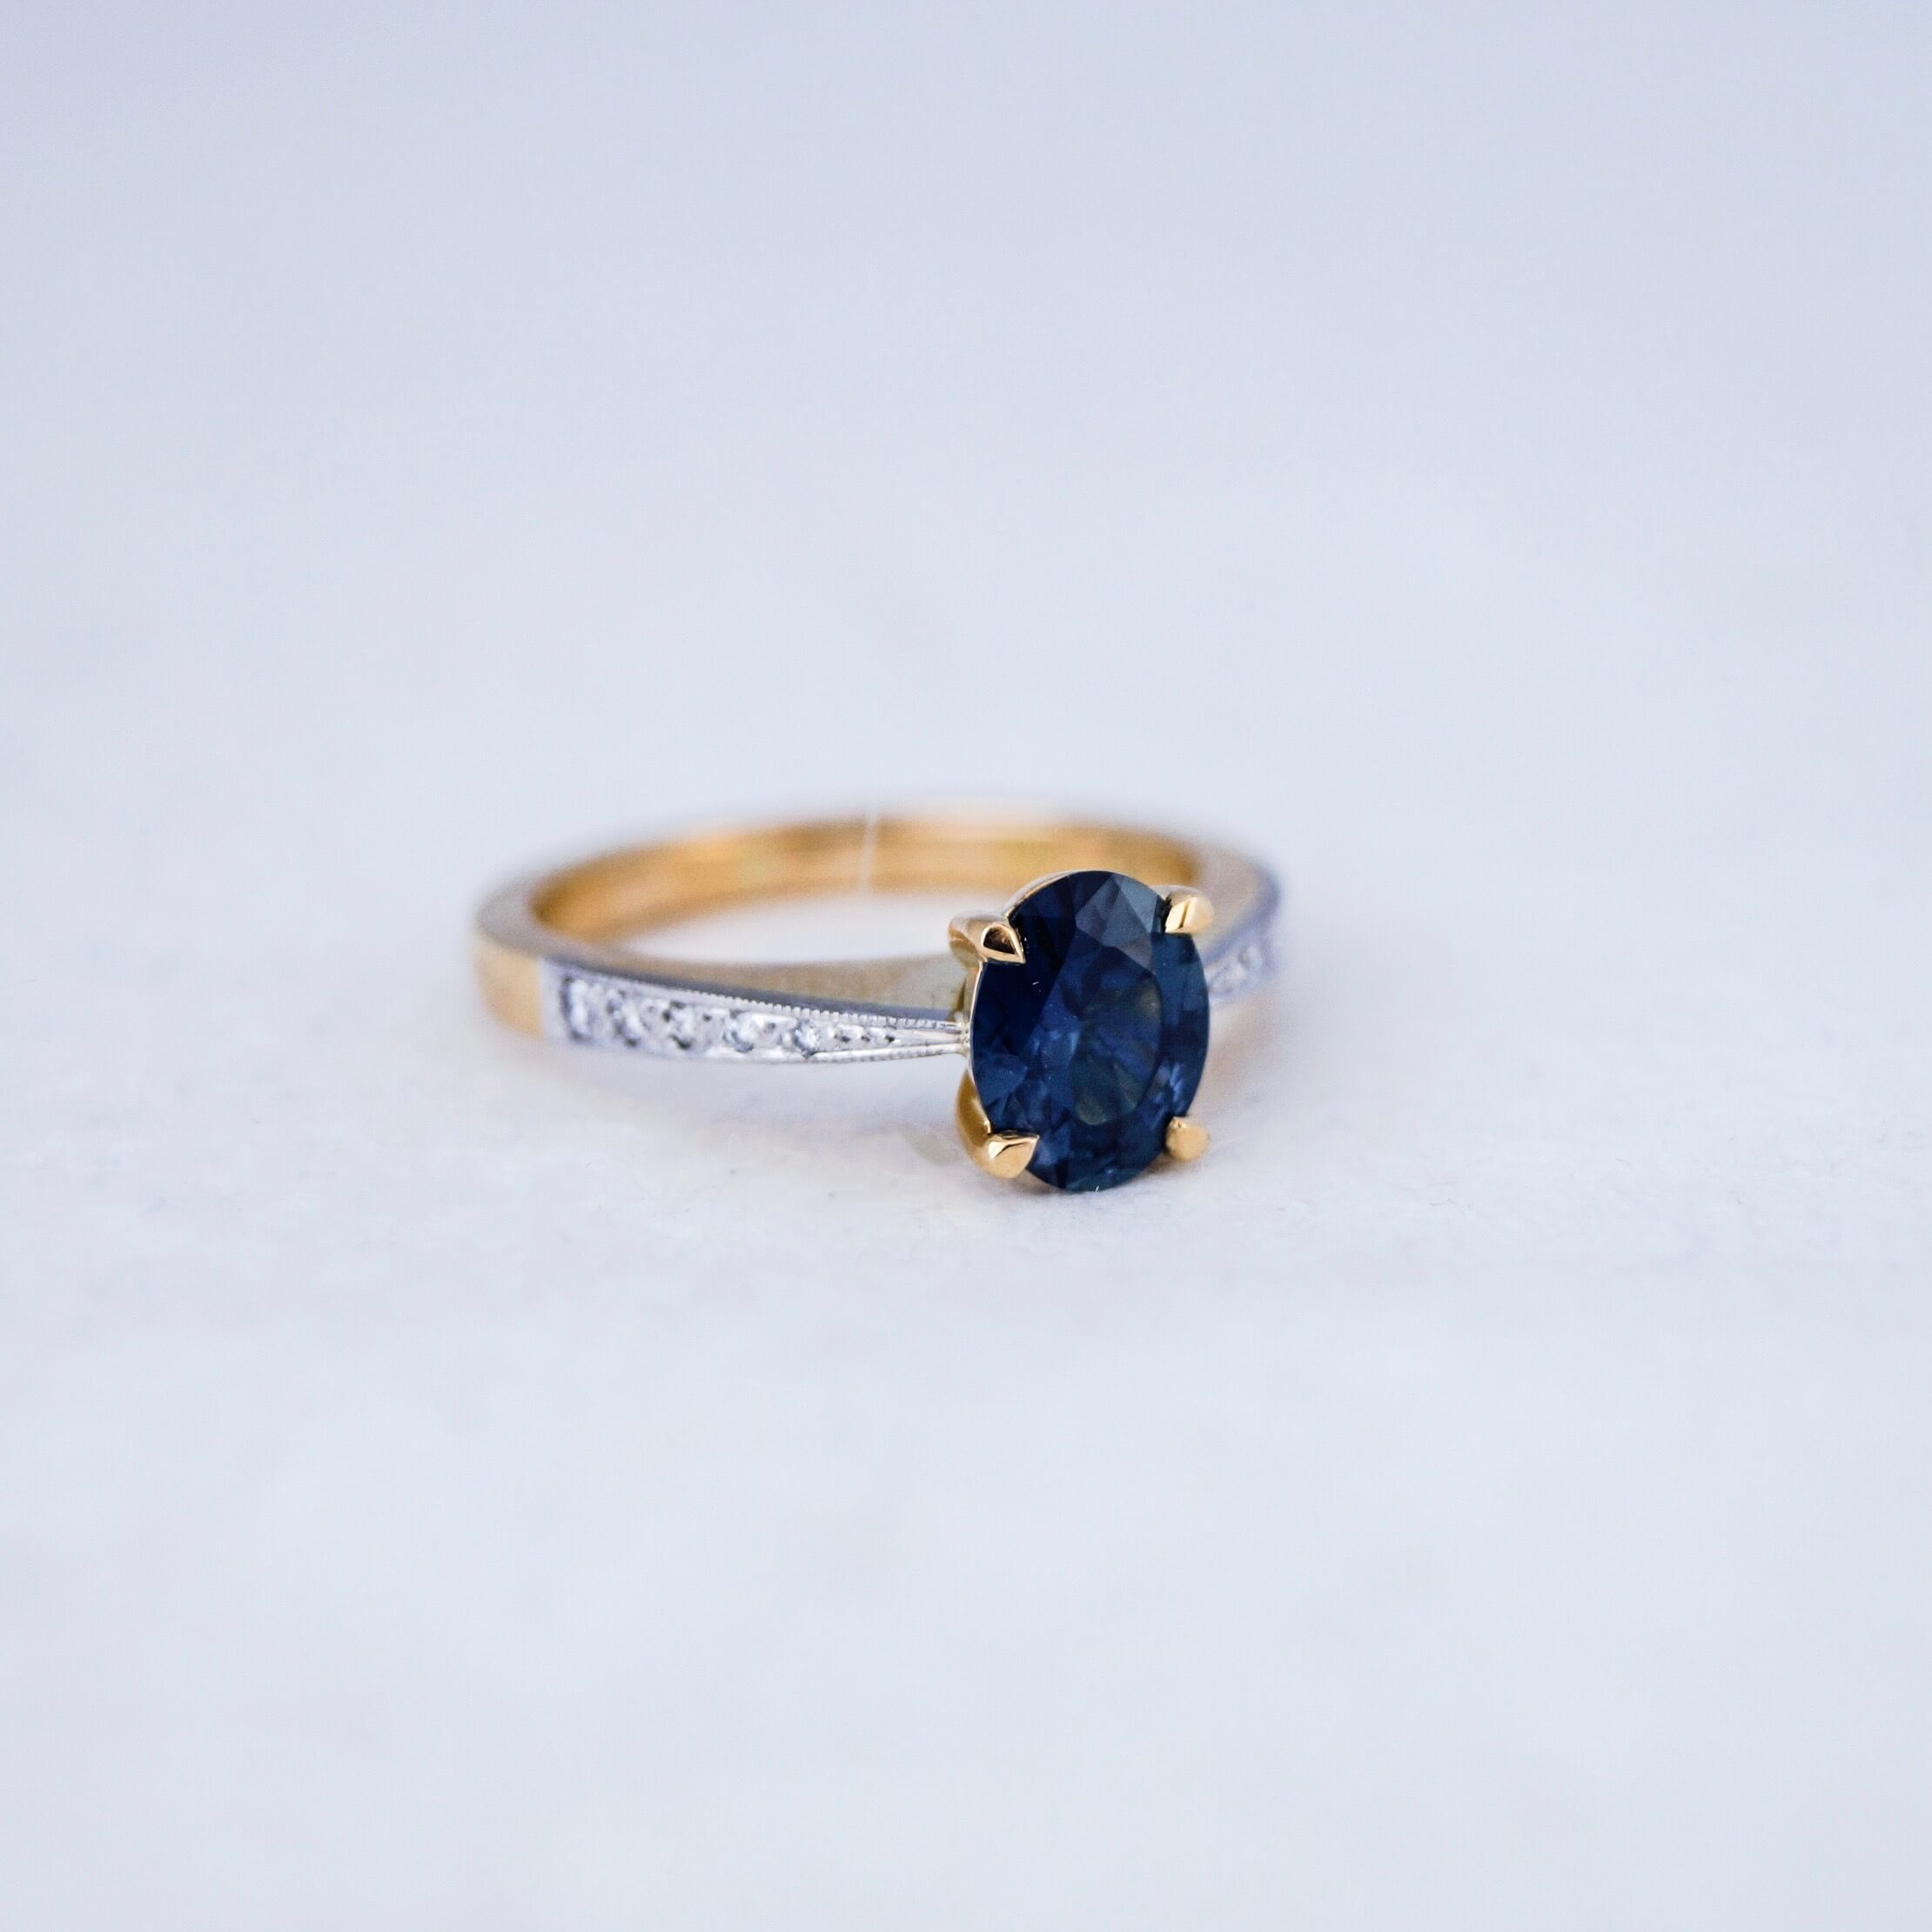 Australian Inverell Sapphire Ring